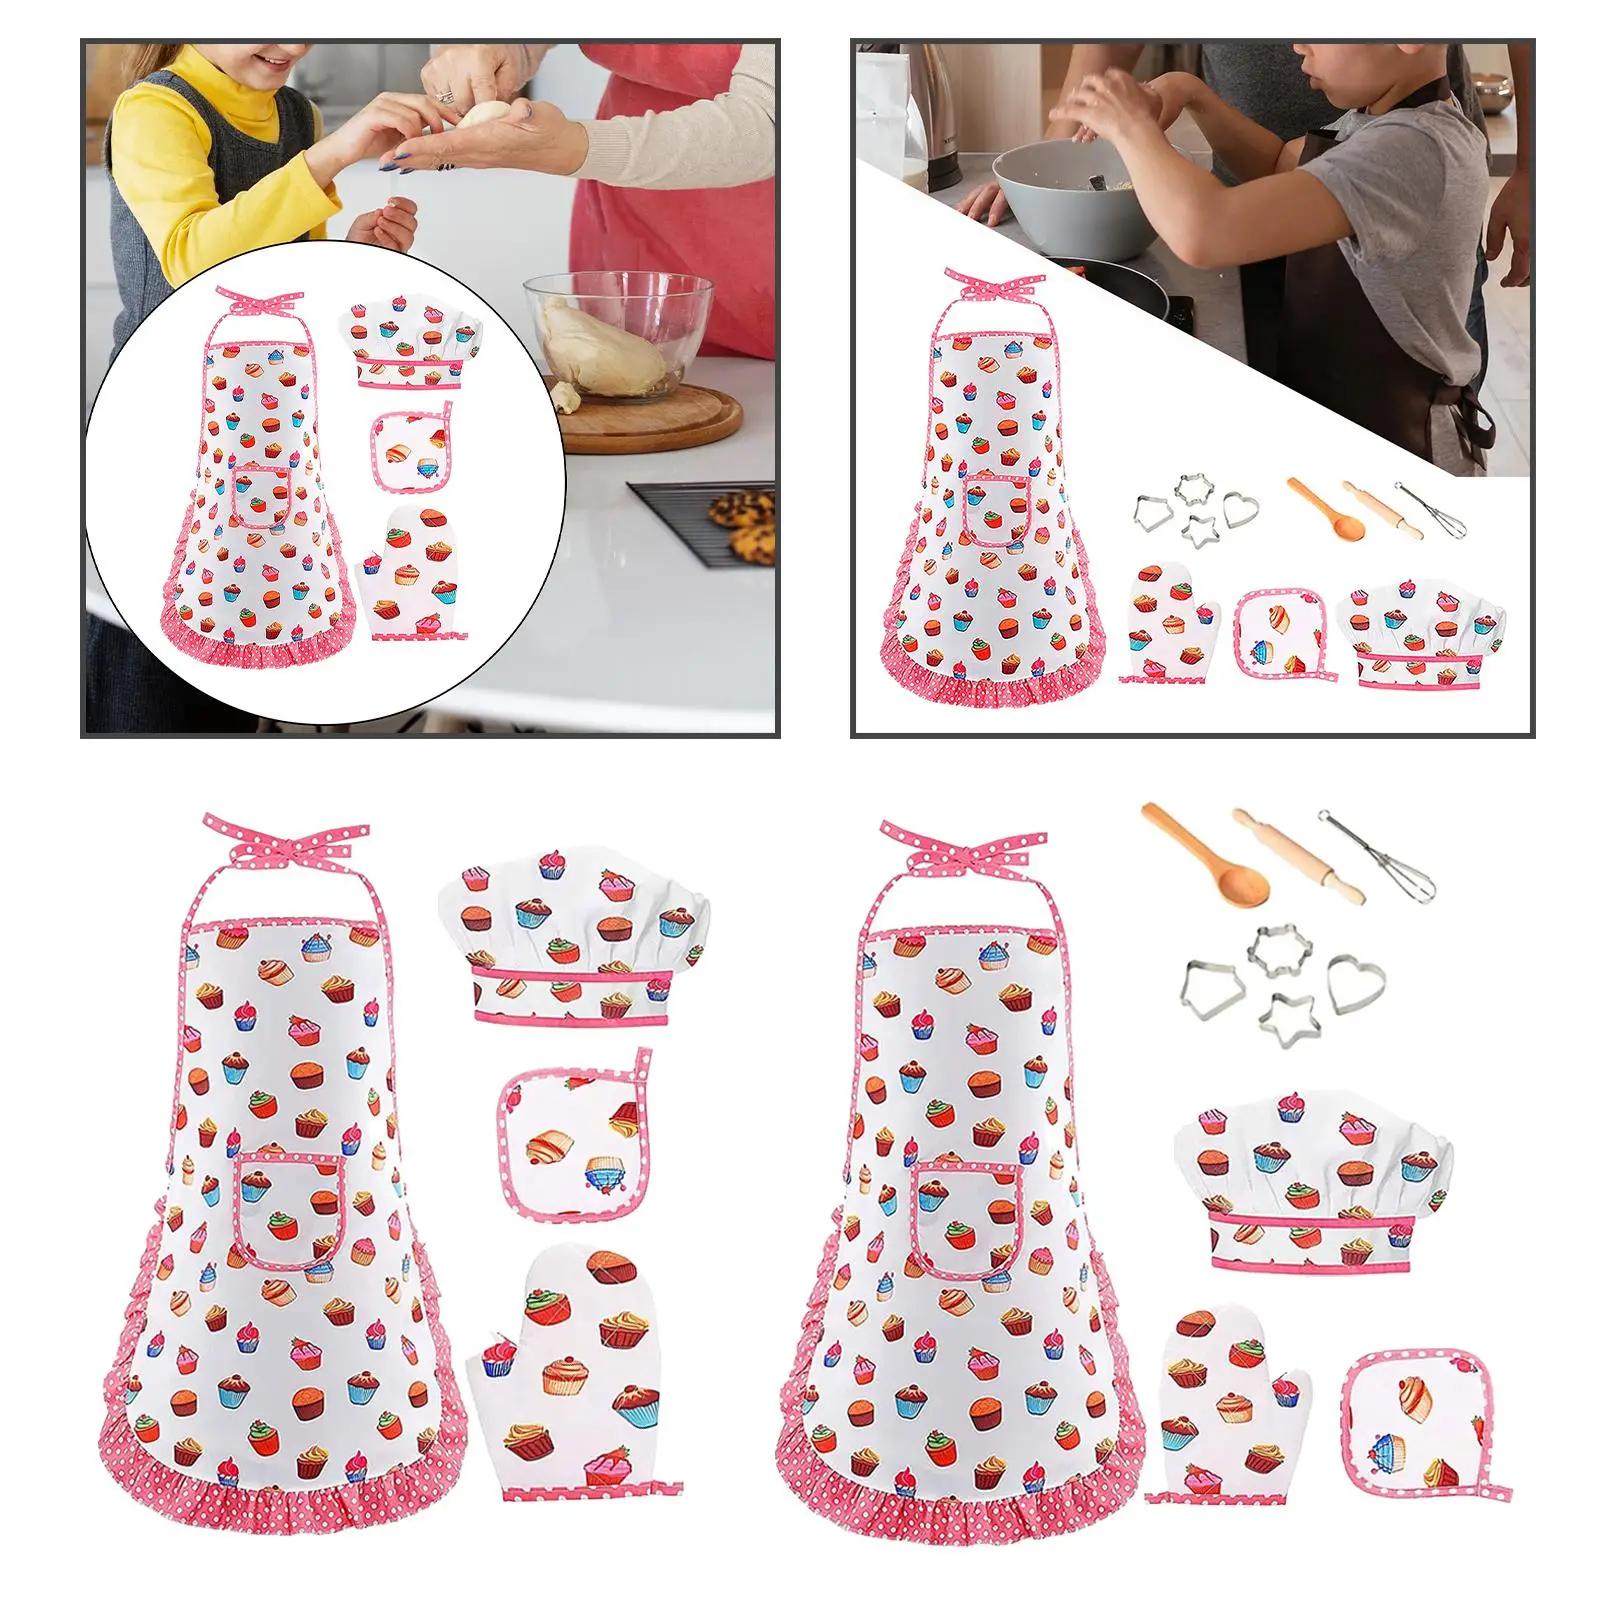 Chef Clothing Set Kids Apron Developmental Toy Cooking Baking Set for Toddlers Children Girls Birthday Gift